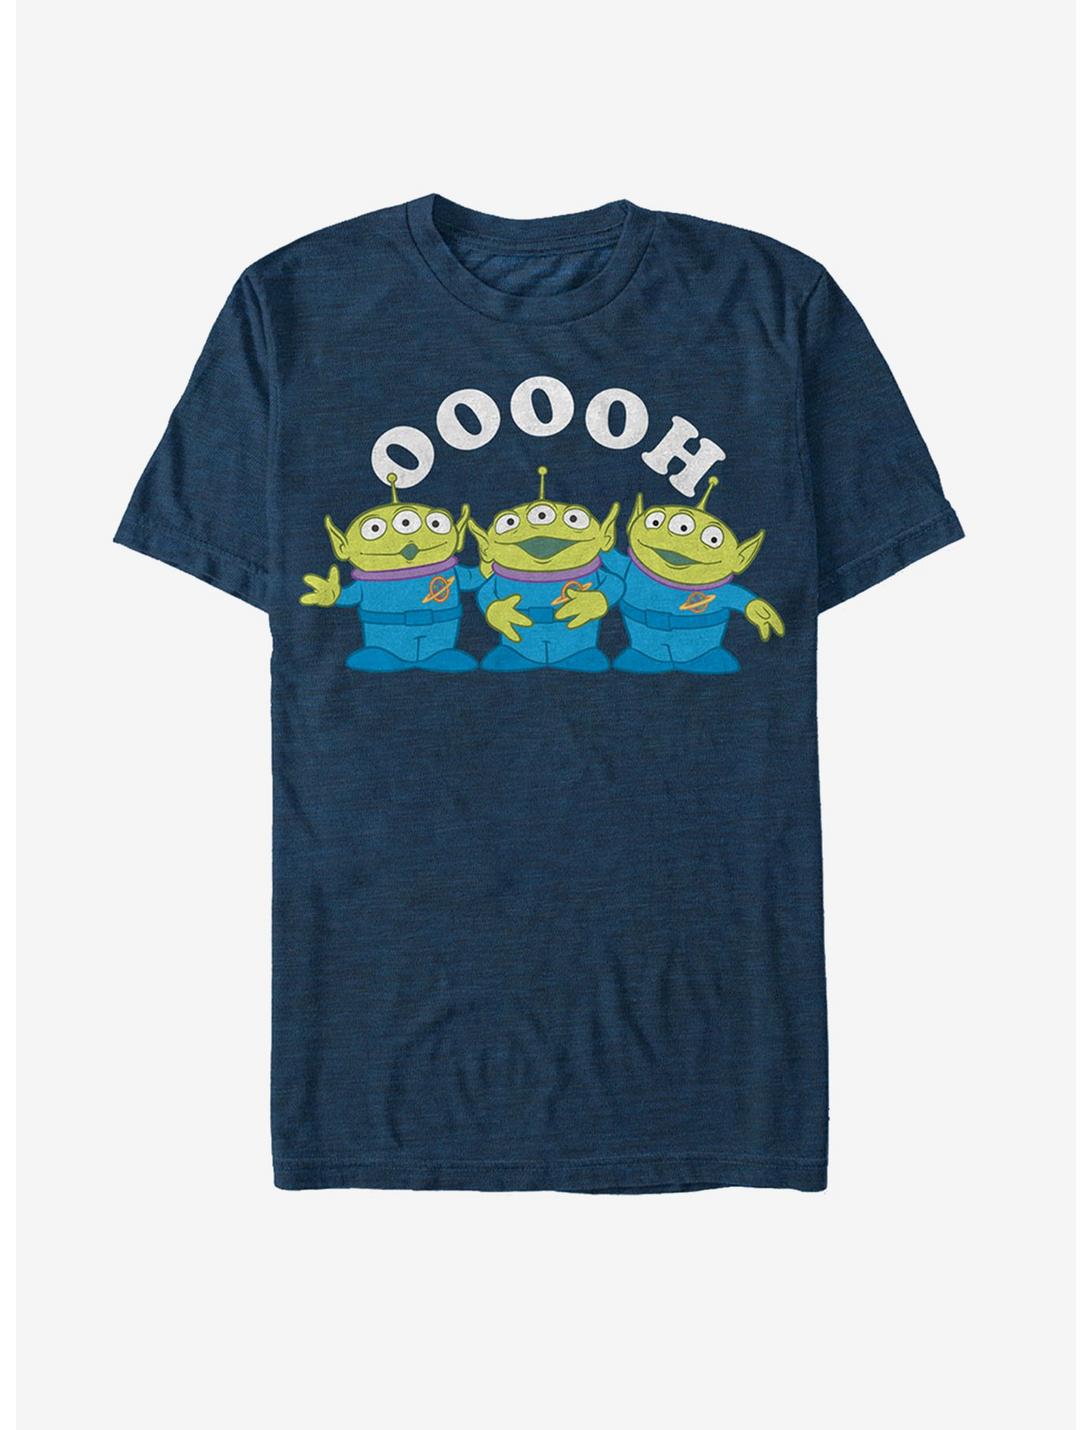 Disney Pixar Toy Story Oooh Squeeze Aliens T-Shirt, NAVY, hi-res